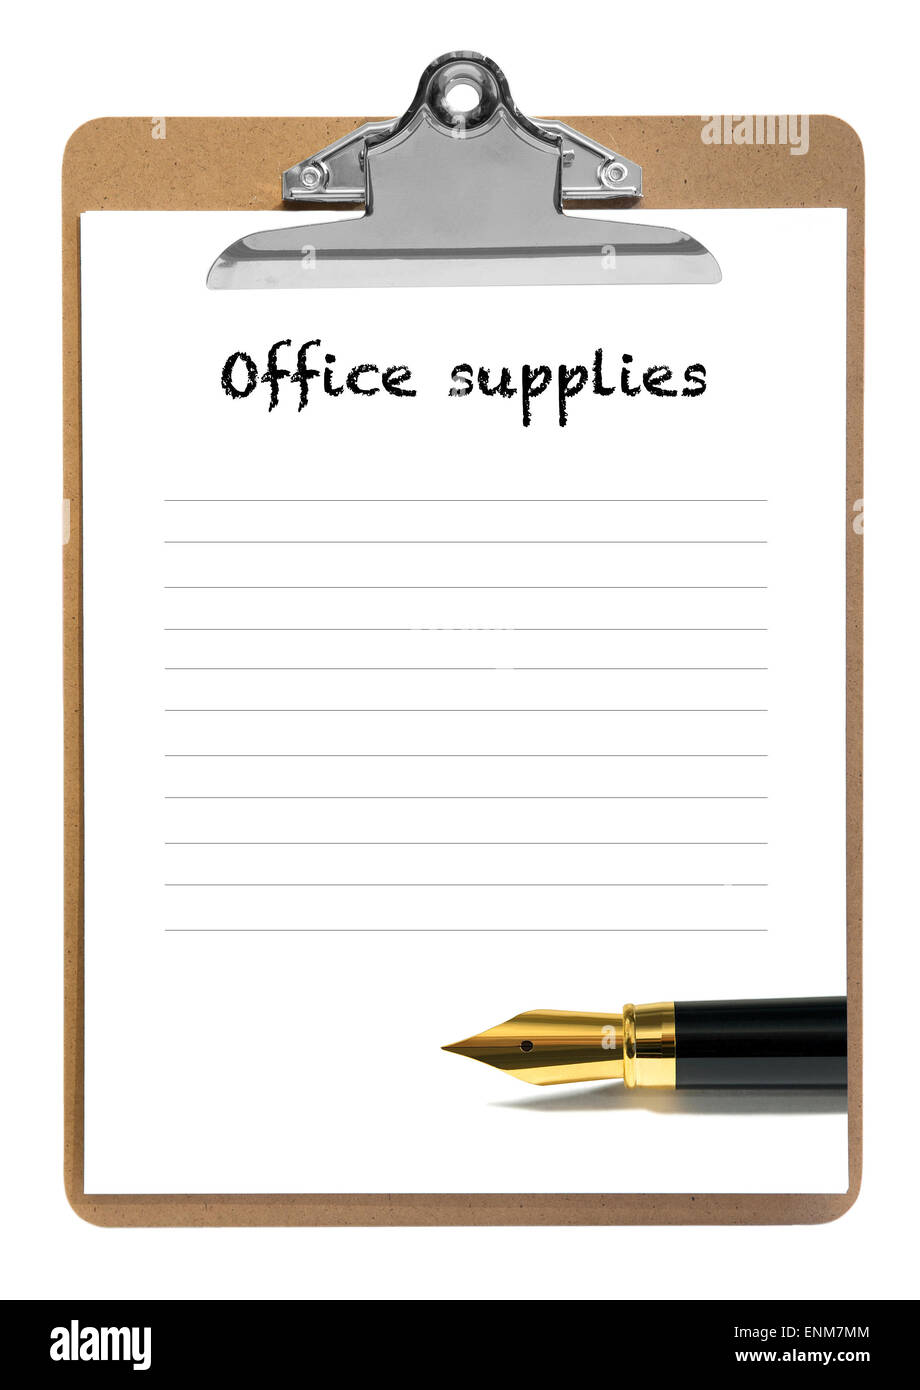 Office supplies blank list Stock Photo